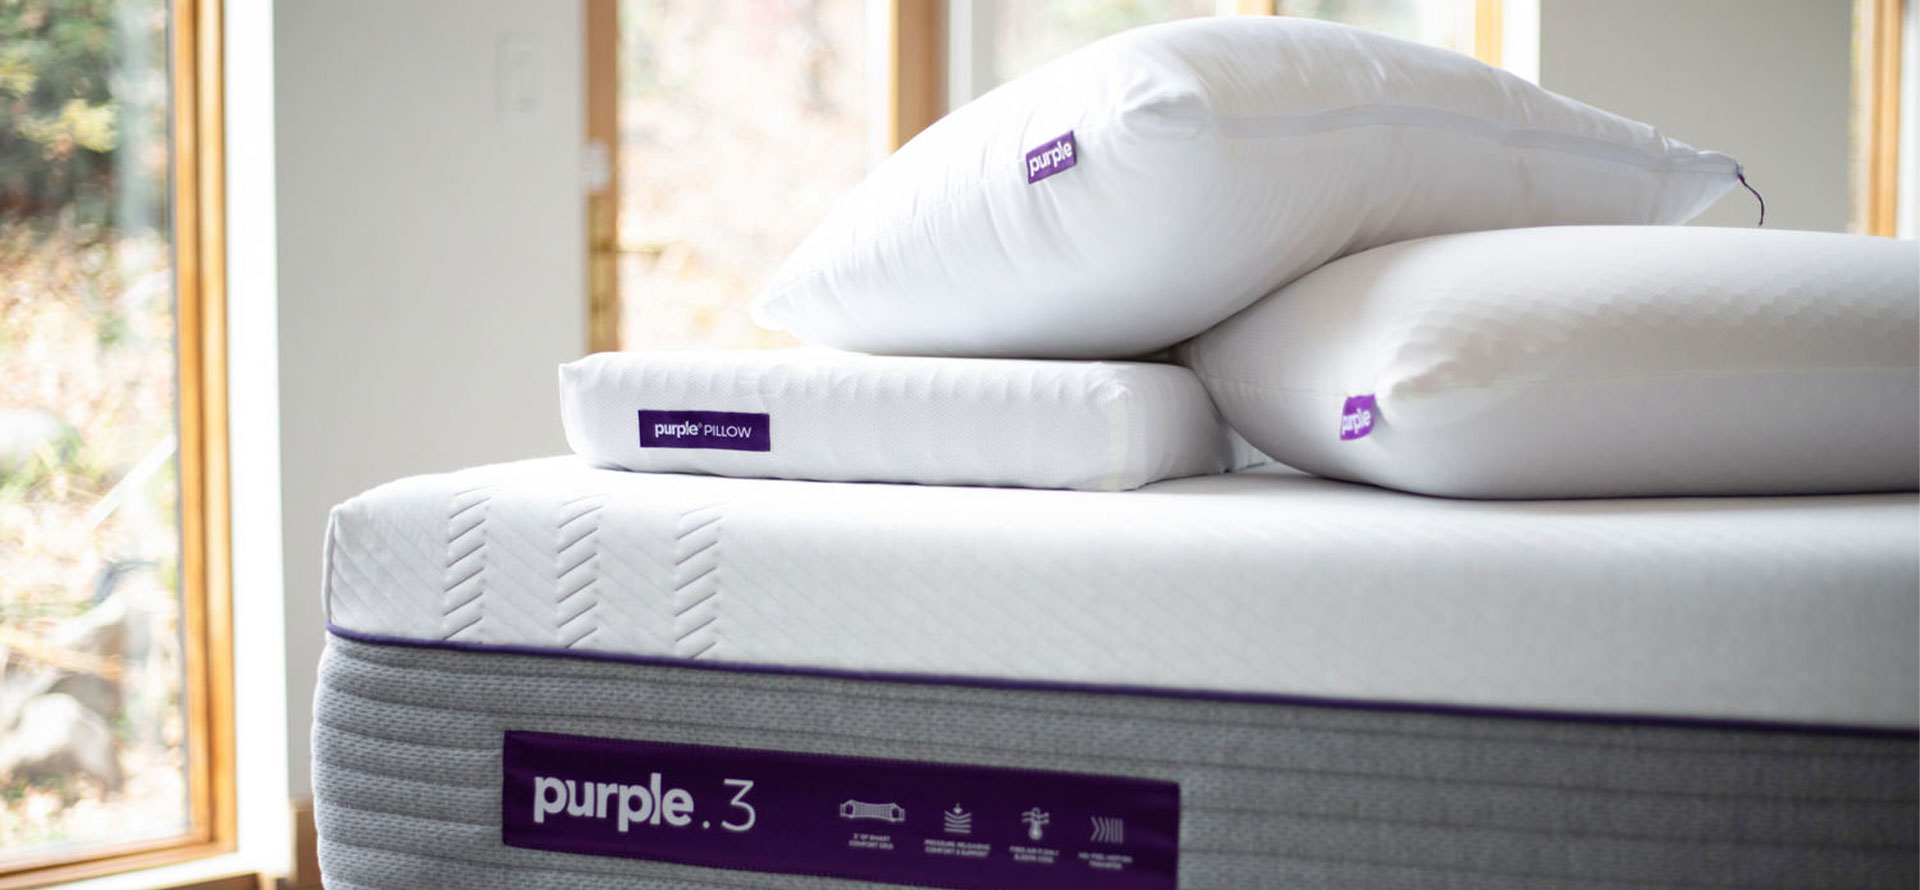 Purple pillow on mattress.